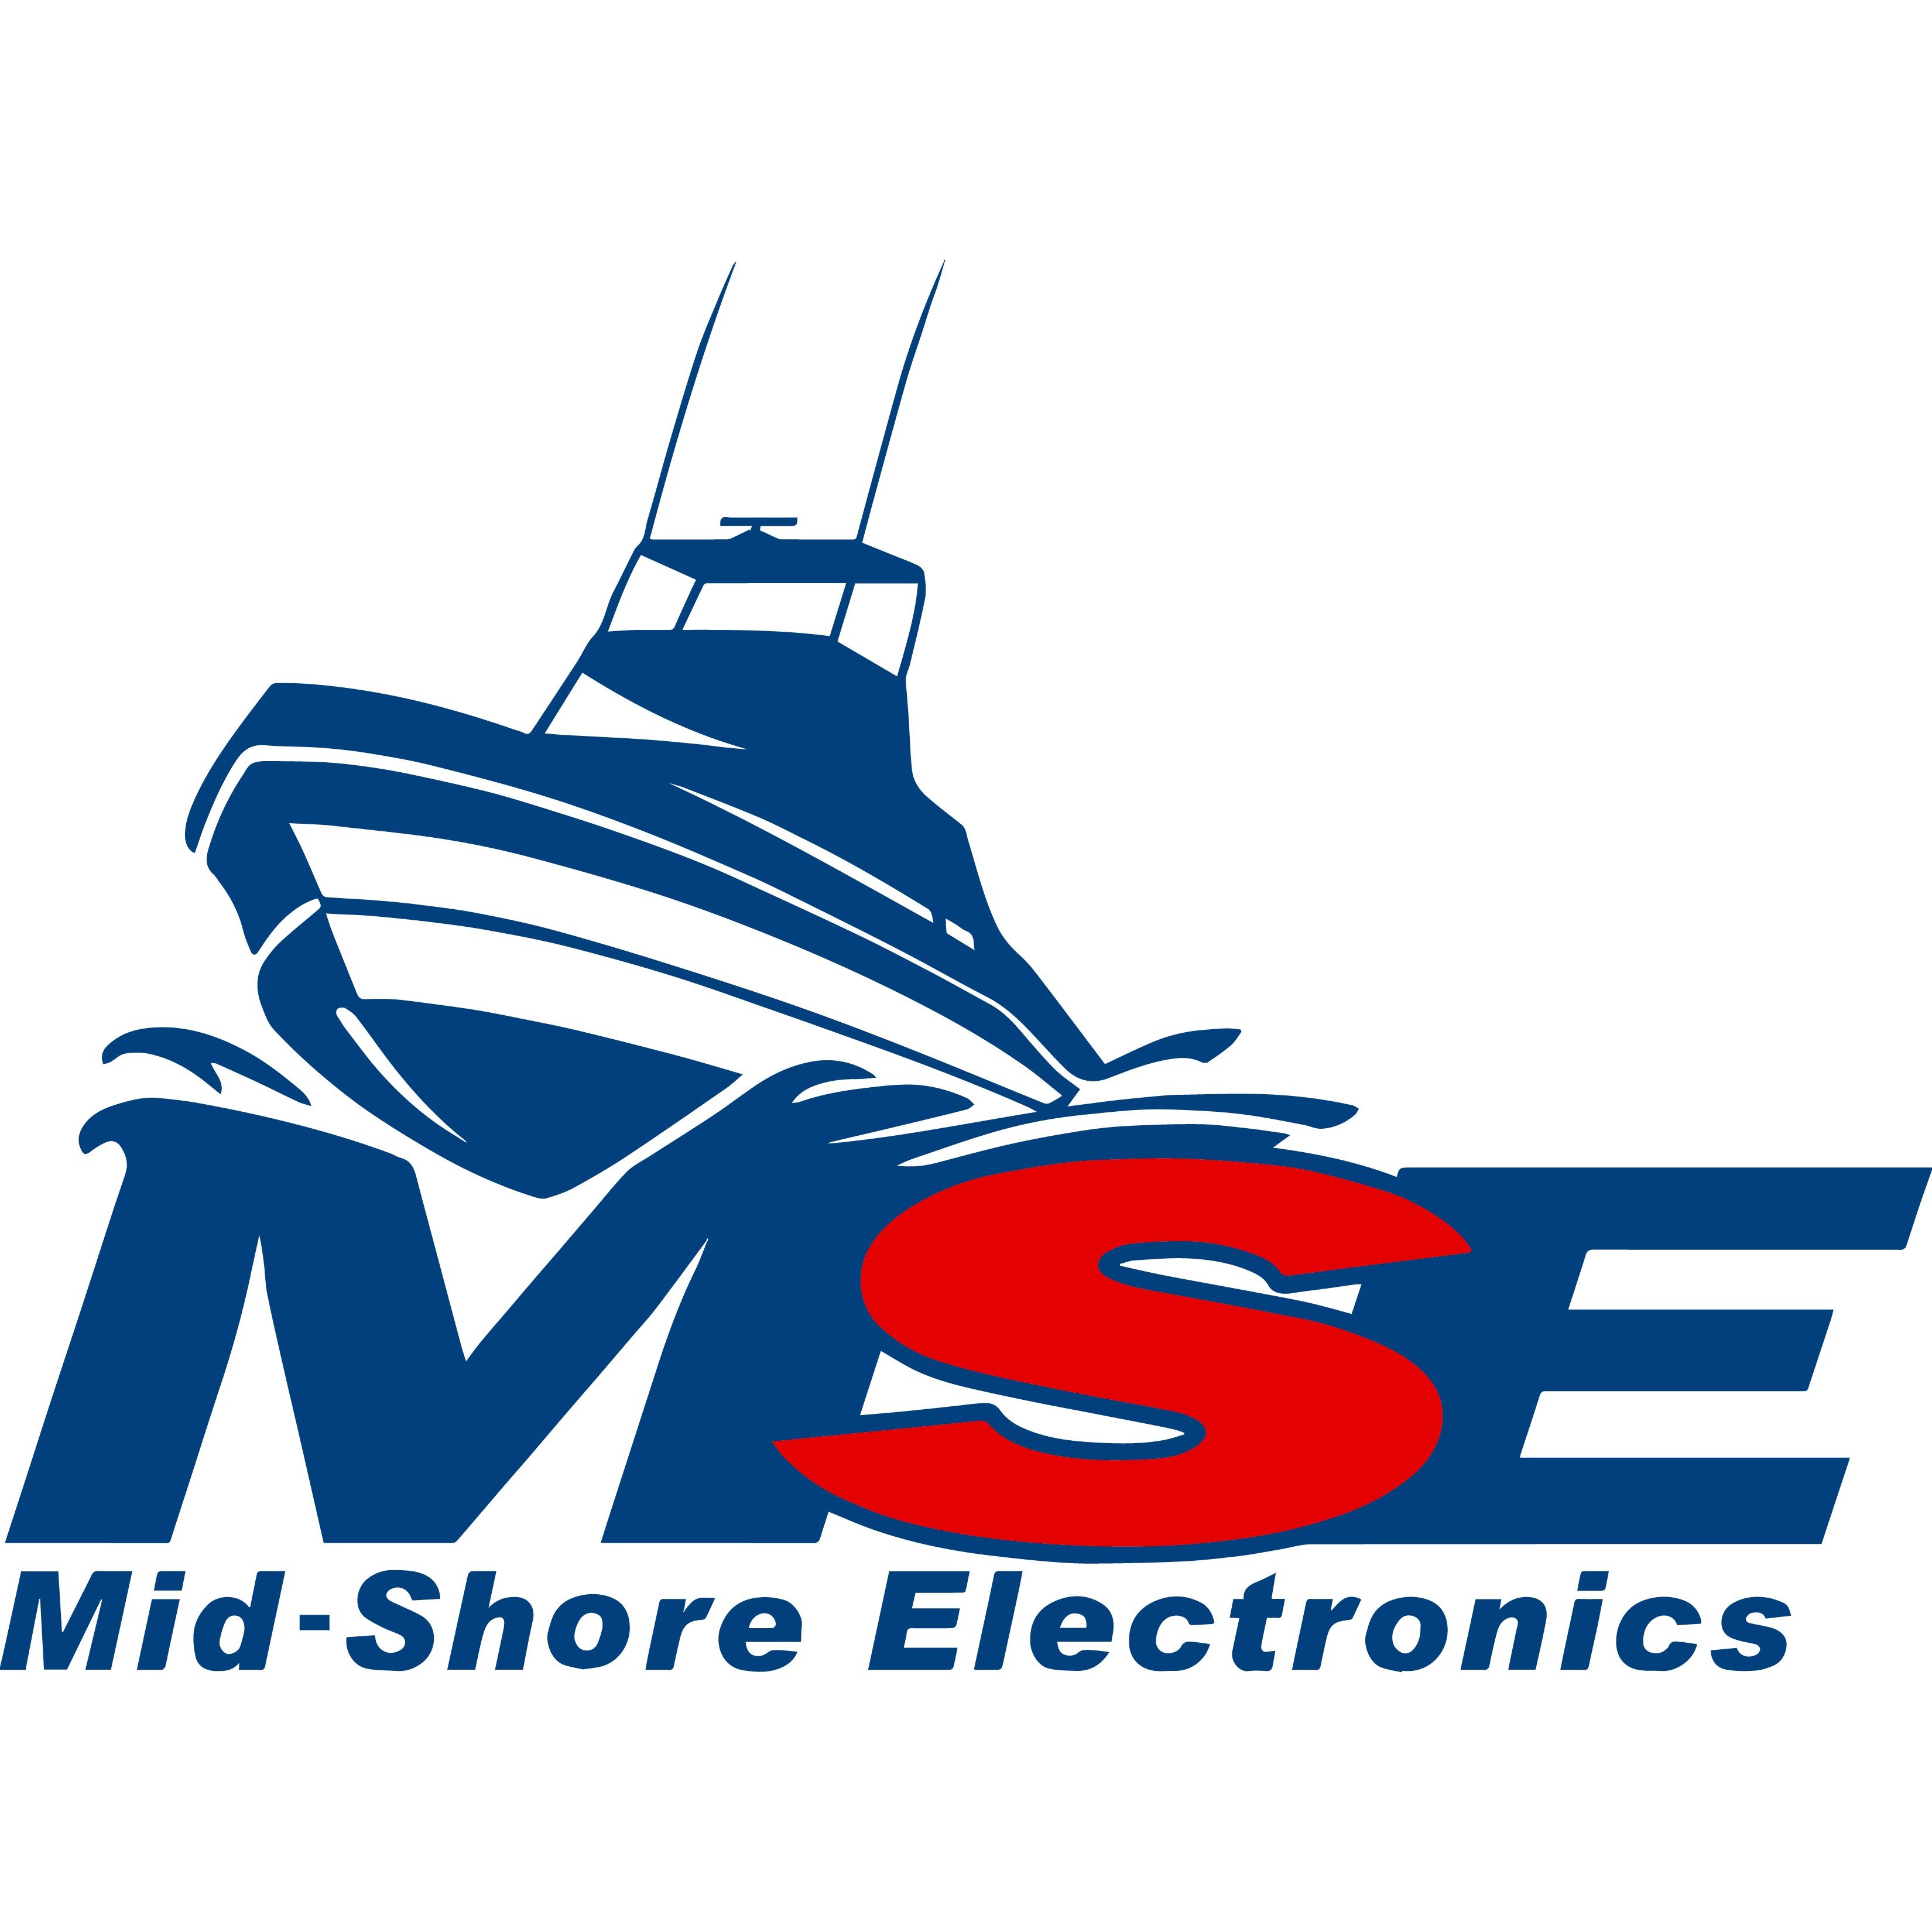 Midshore Electronics